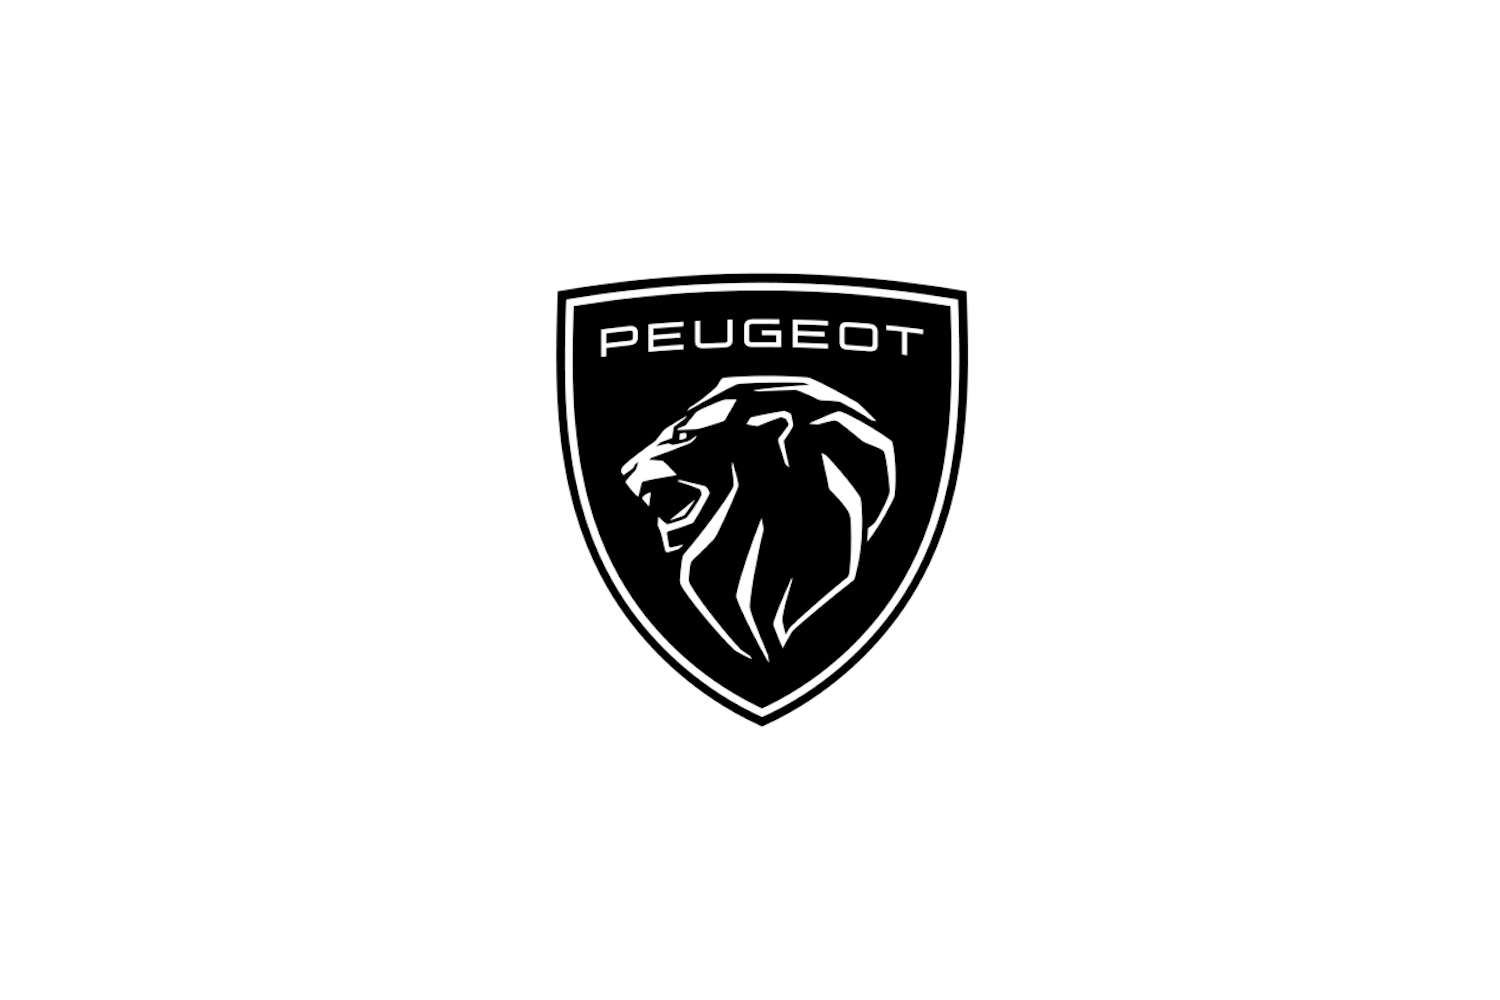 Peugeot gets a new badge